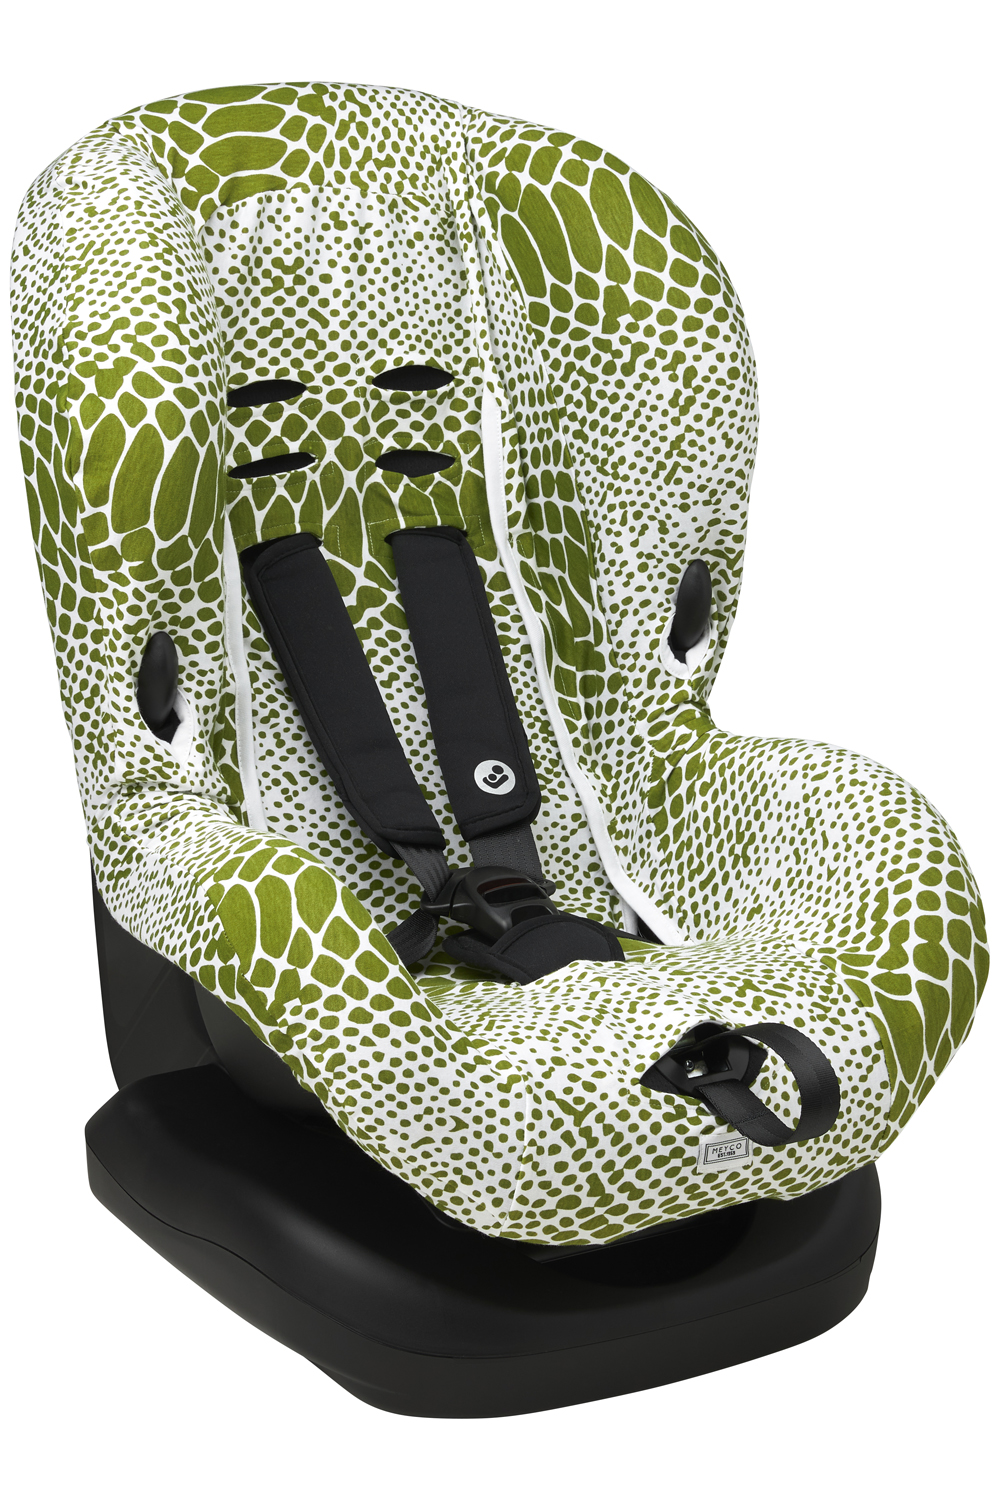 Kindersitzbezug Snake - avocado - Gruppe 1+